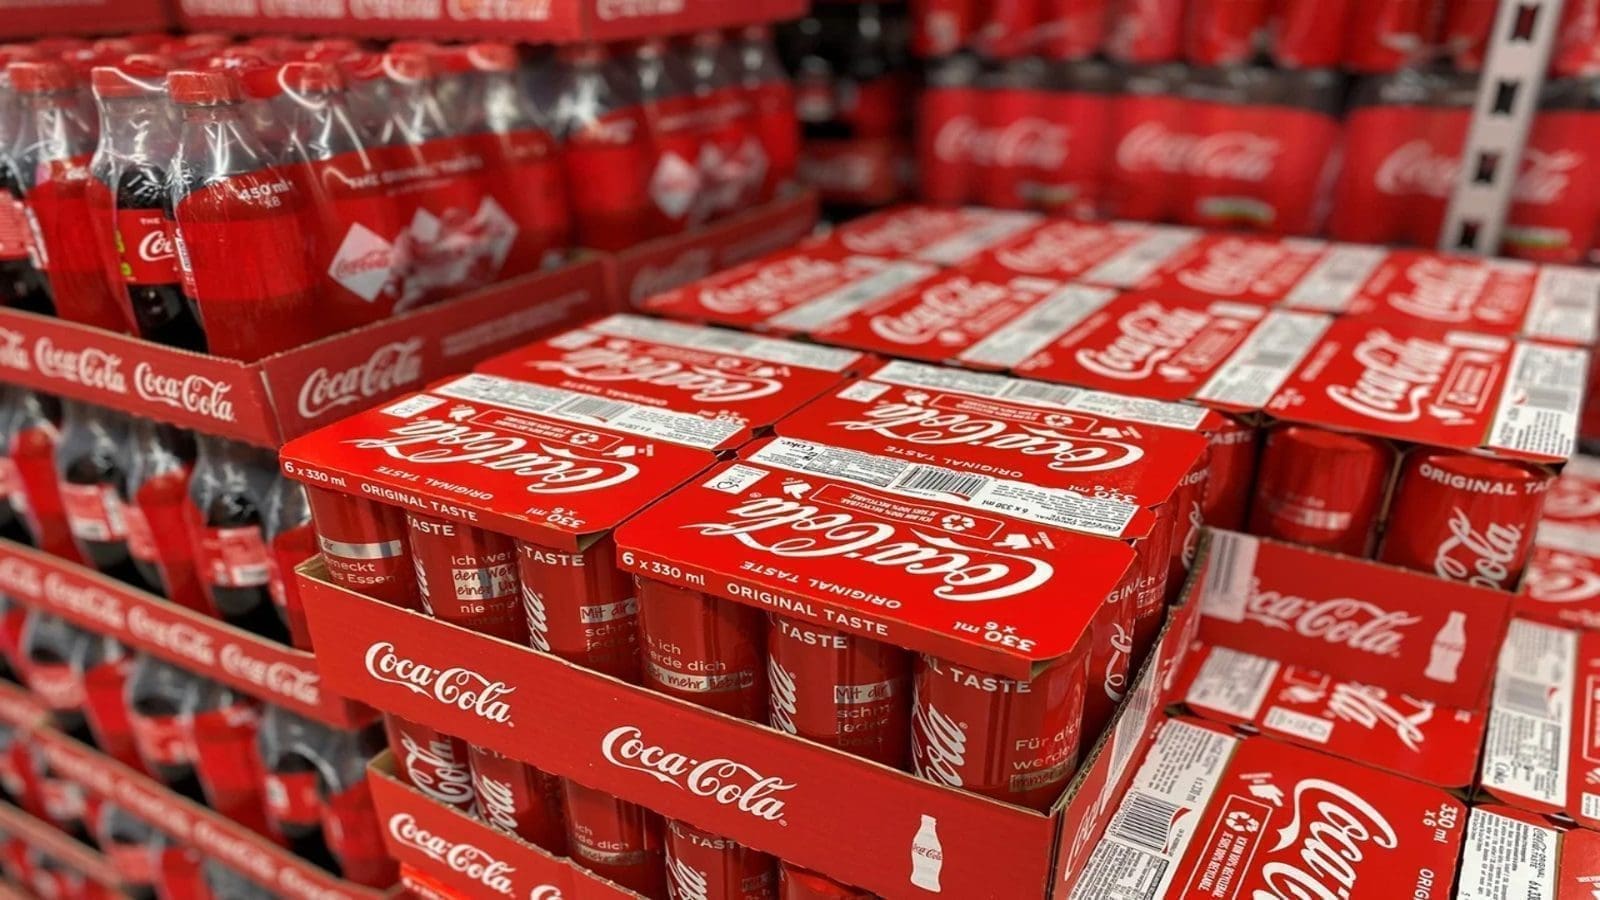 Coca-Cola bottler Liberty to introduce fiber-based paper packaging format in US market